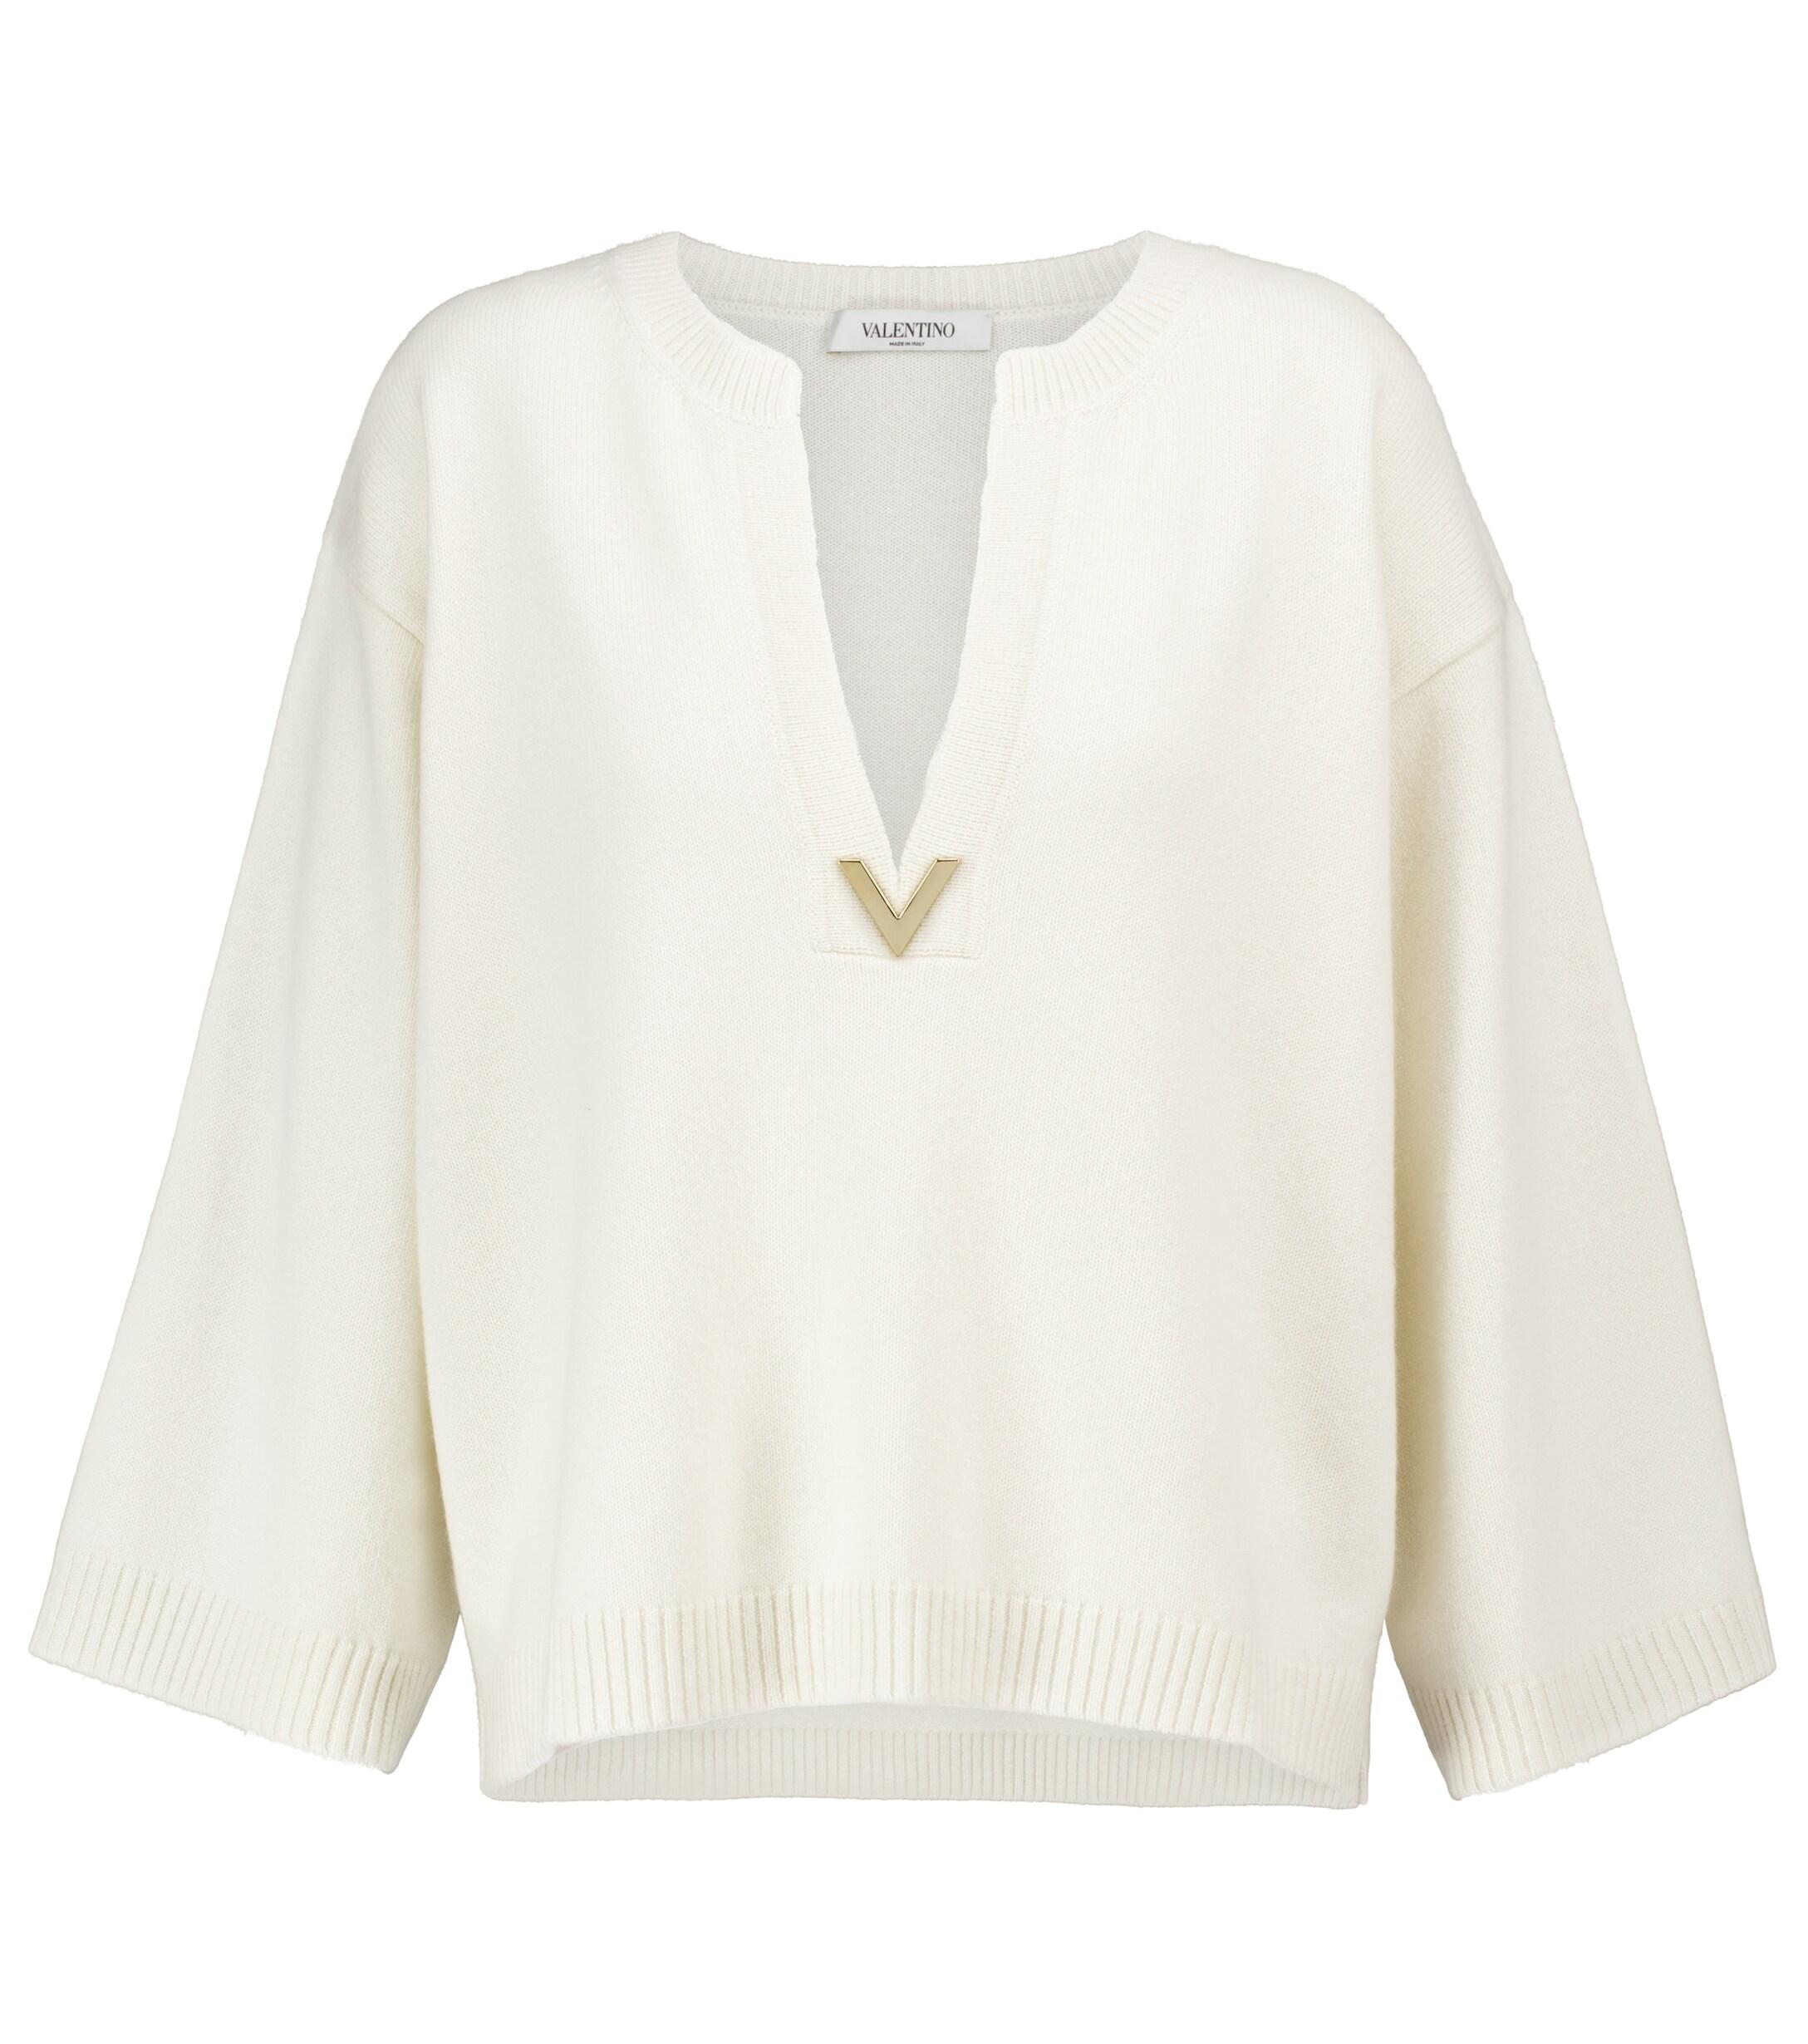 Valentino Cashmere Sweater in White - Lyst